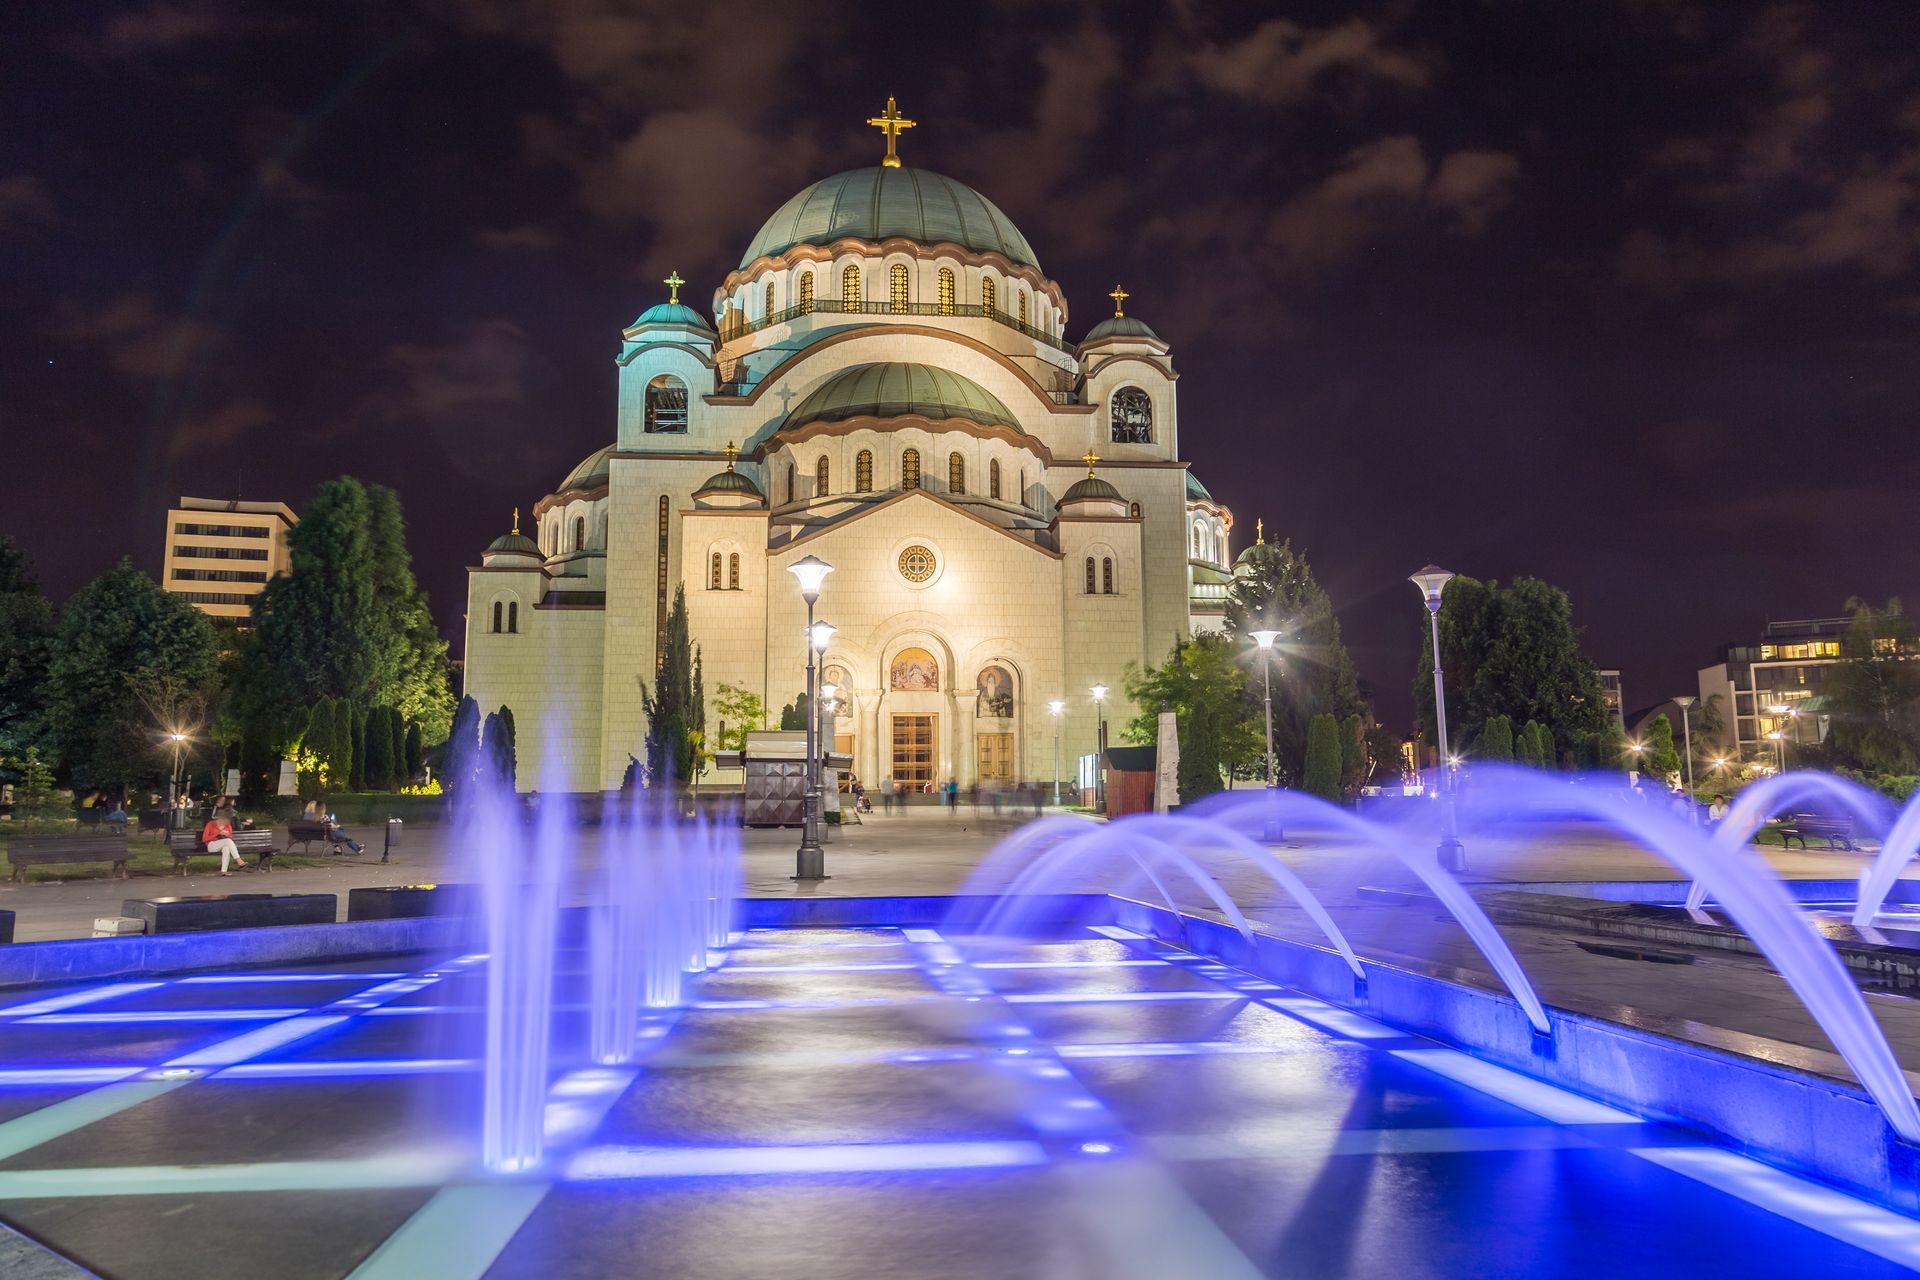 Belgrade Sightseens Tours